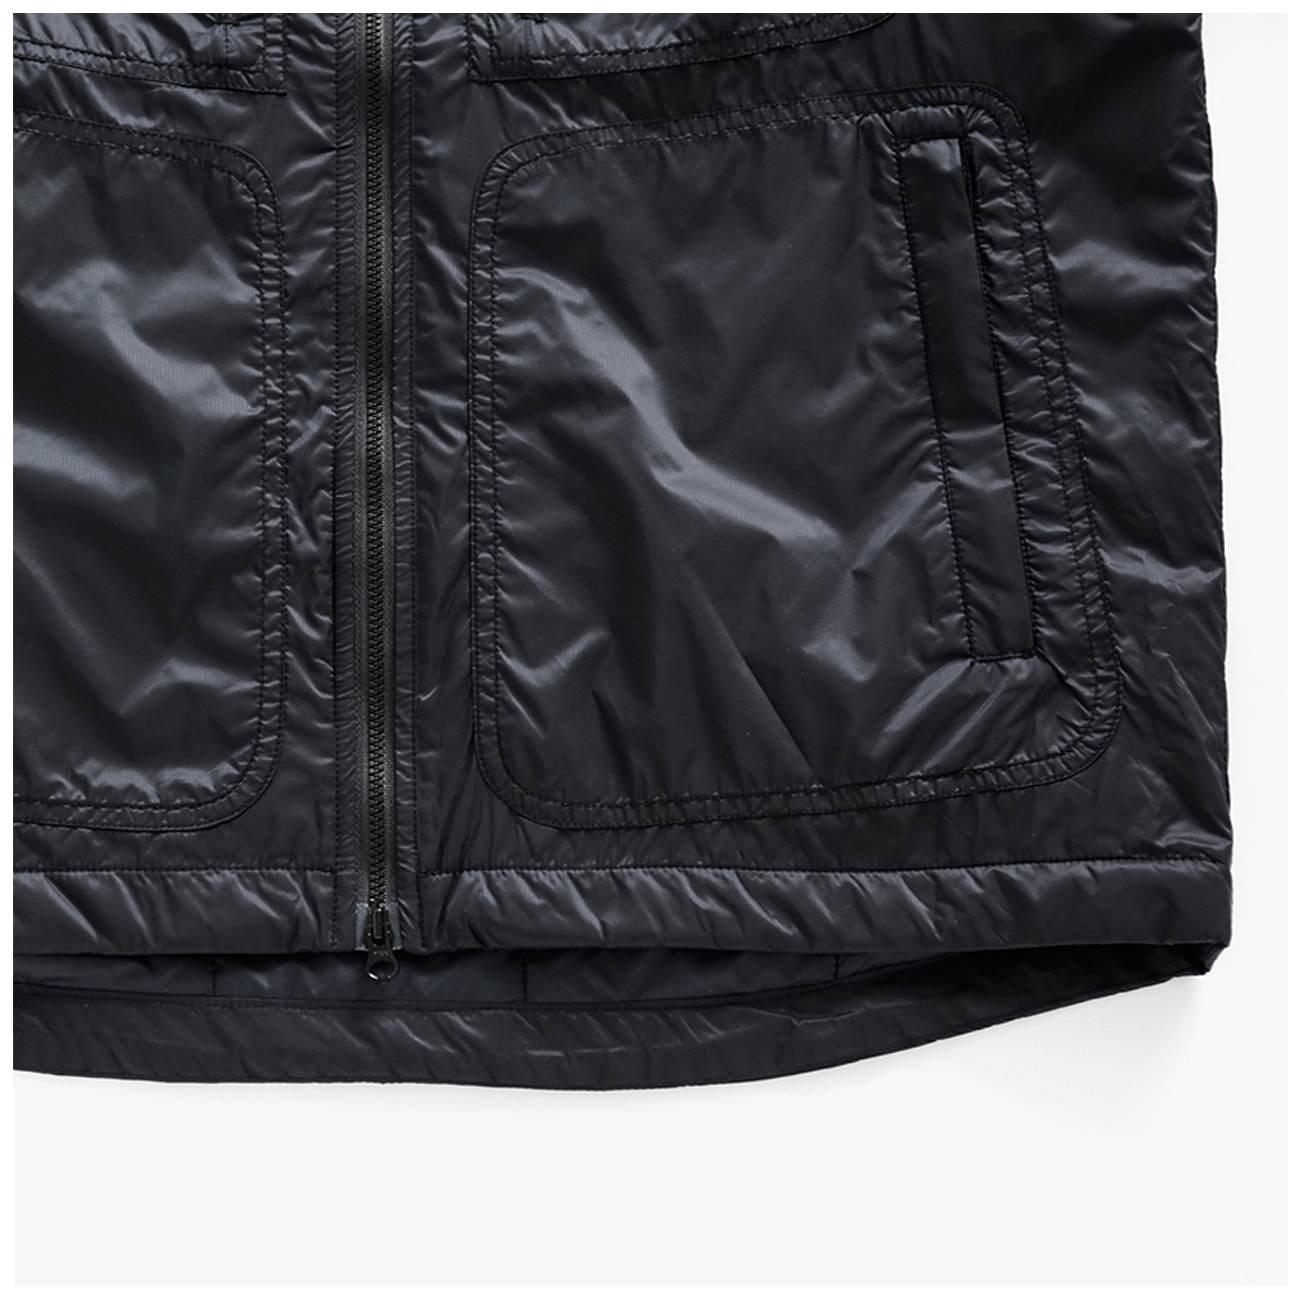 CAYL Roundneck Insulation Jacket- Black